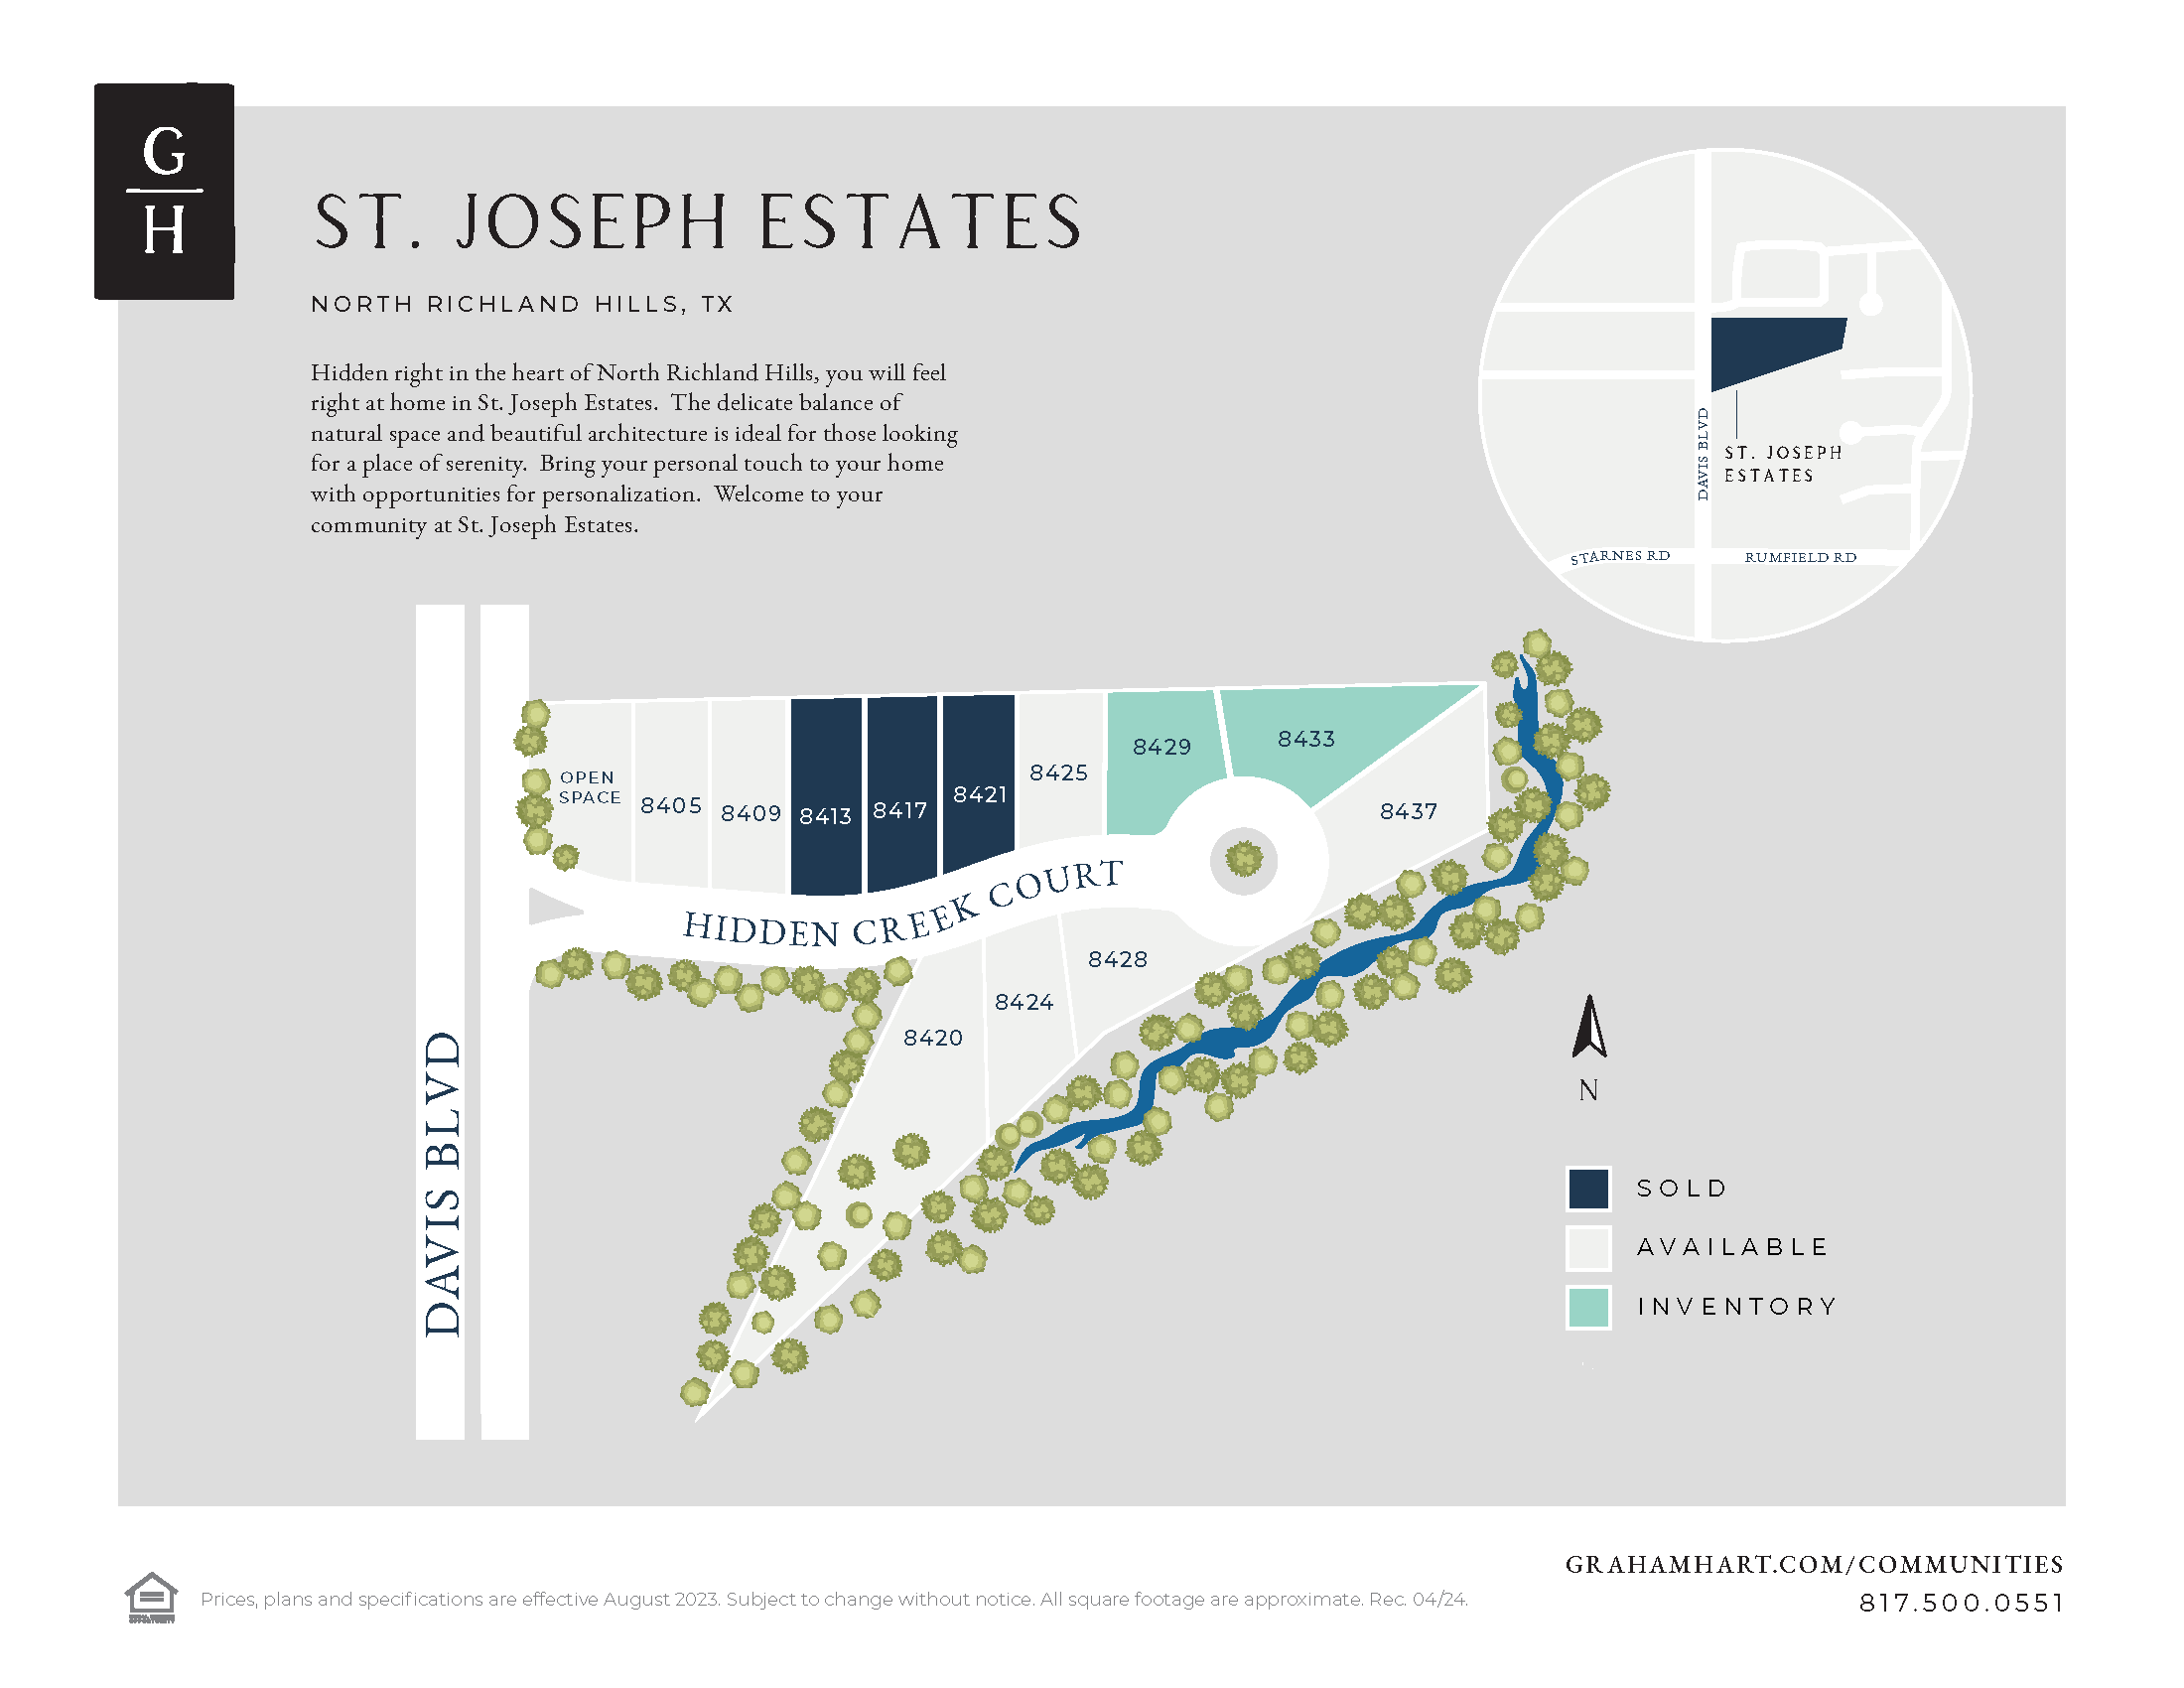 St. Joseph Estates community plat map